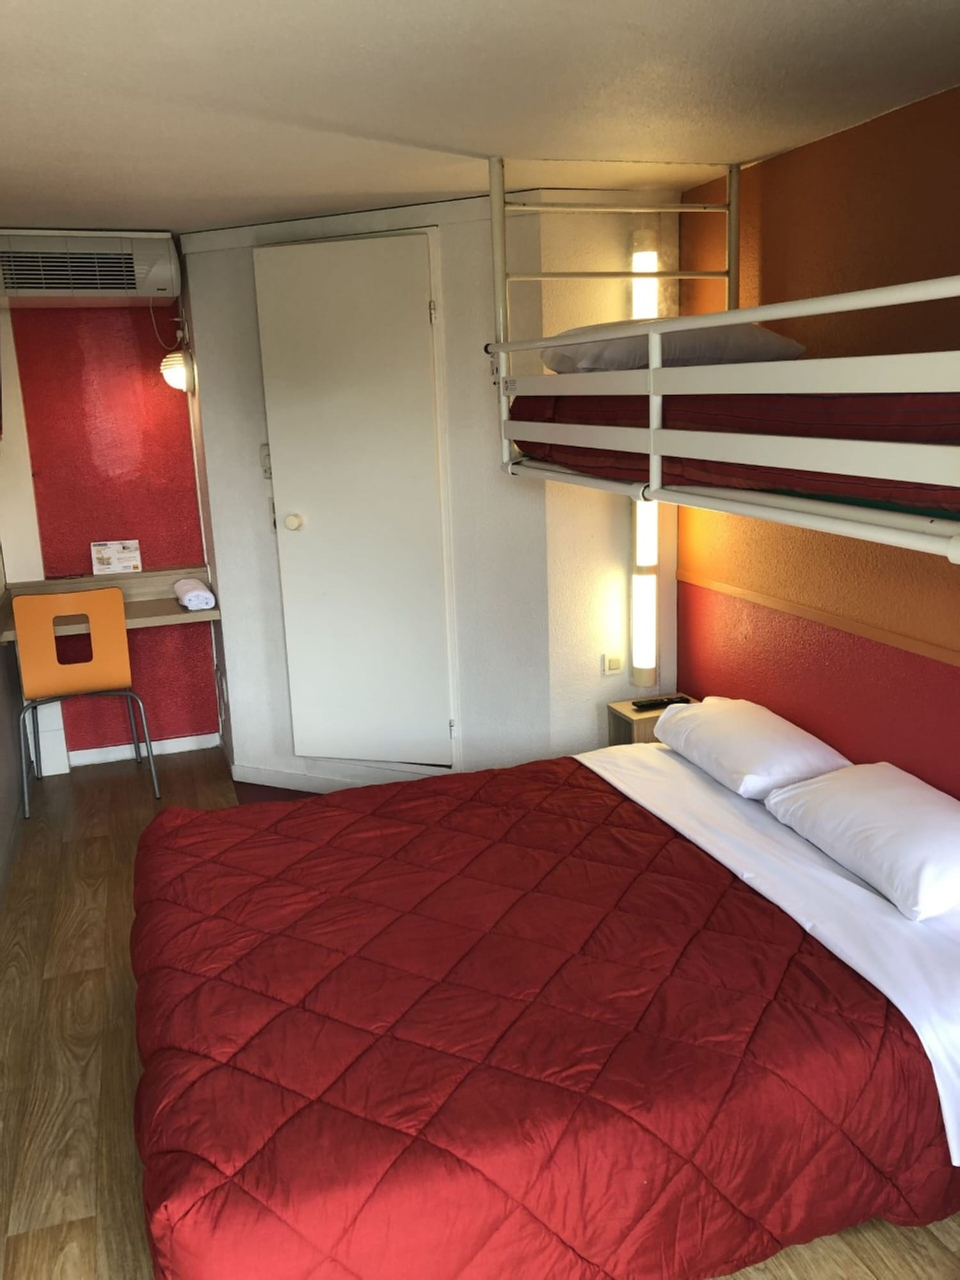 Bedroom 3, Premiere Classe Laon Hotel, Aisne